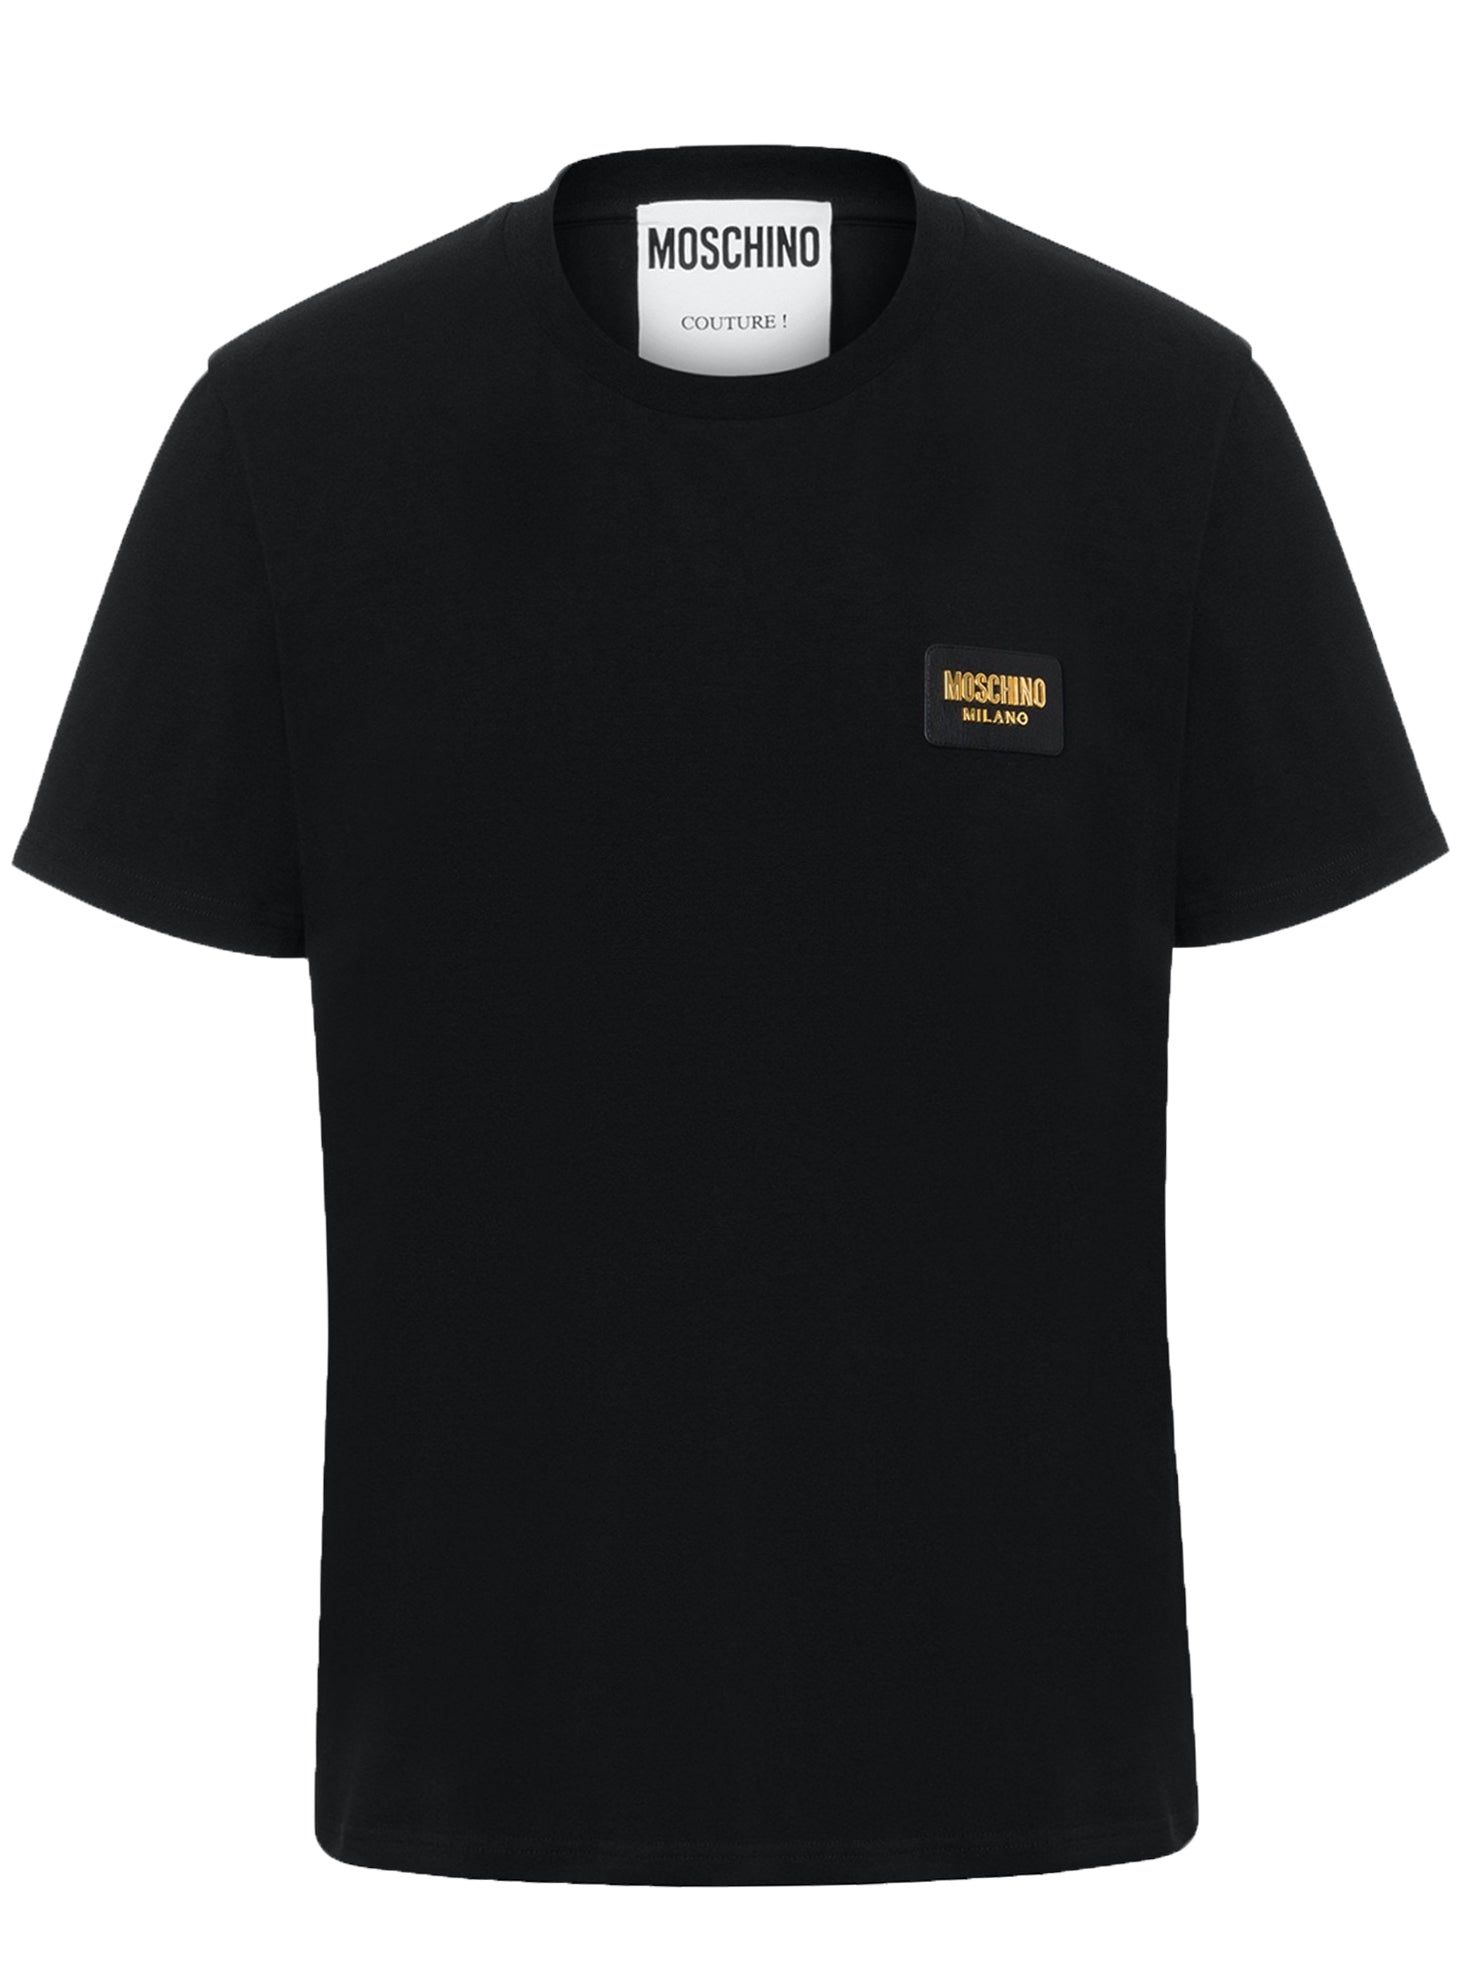 Moschino Label Jersey T-shirt - Black